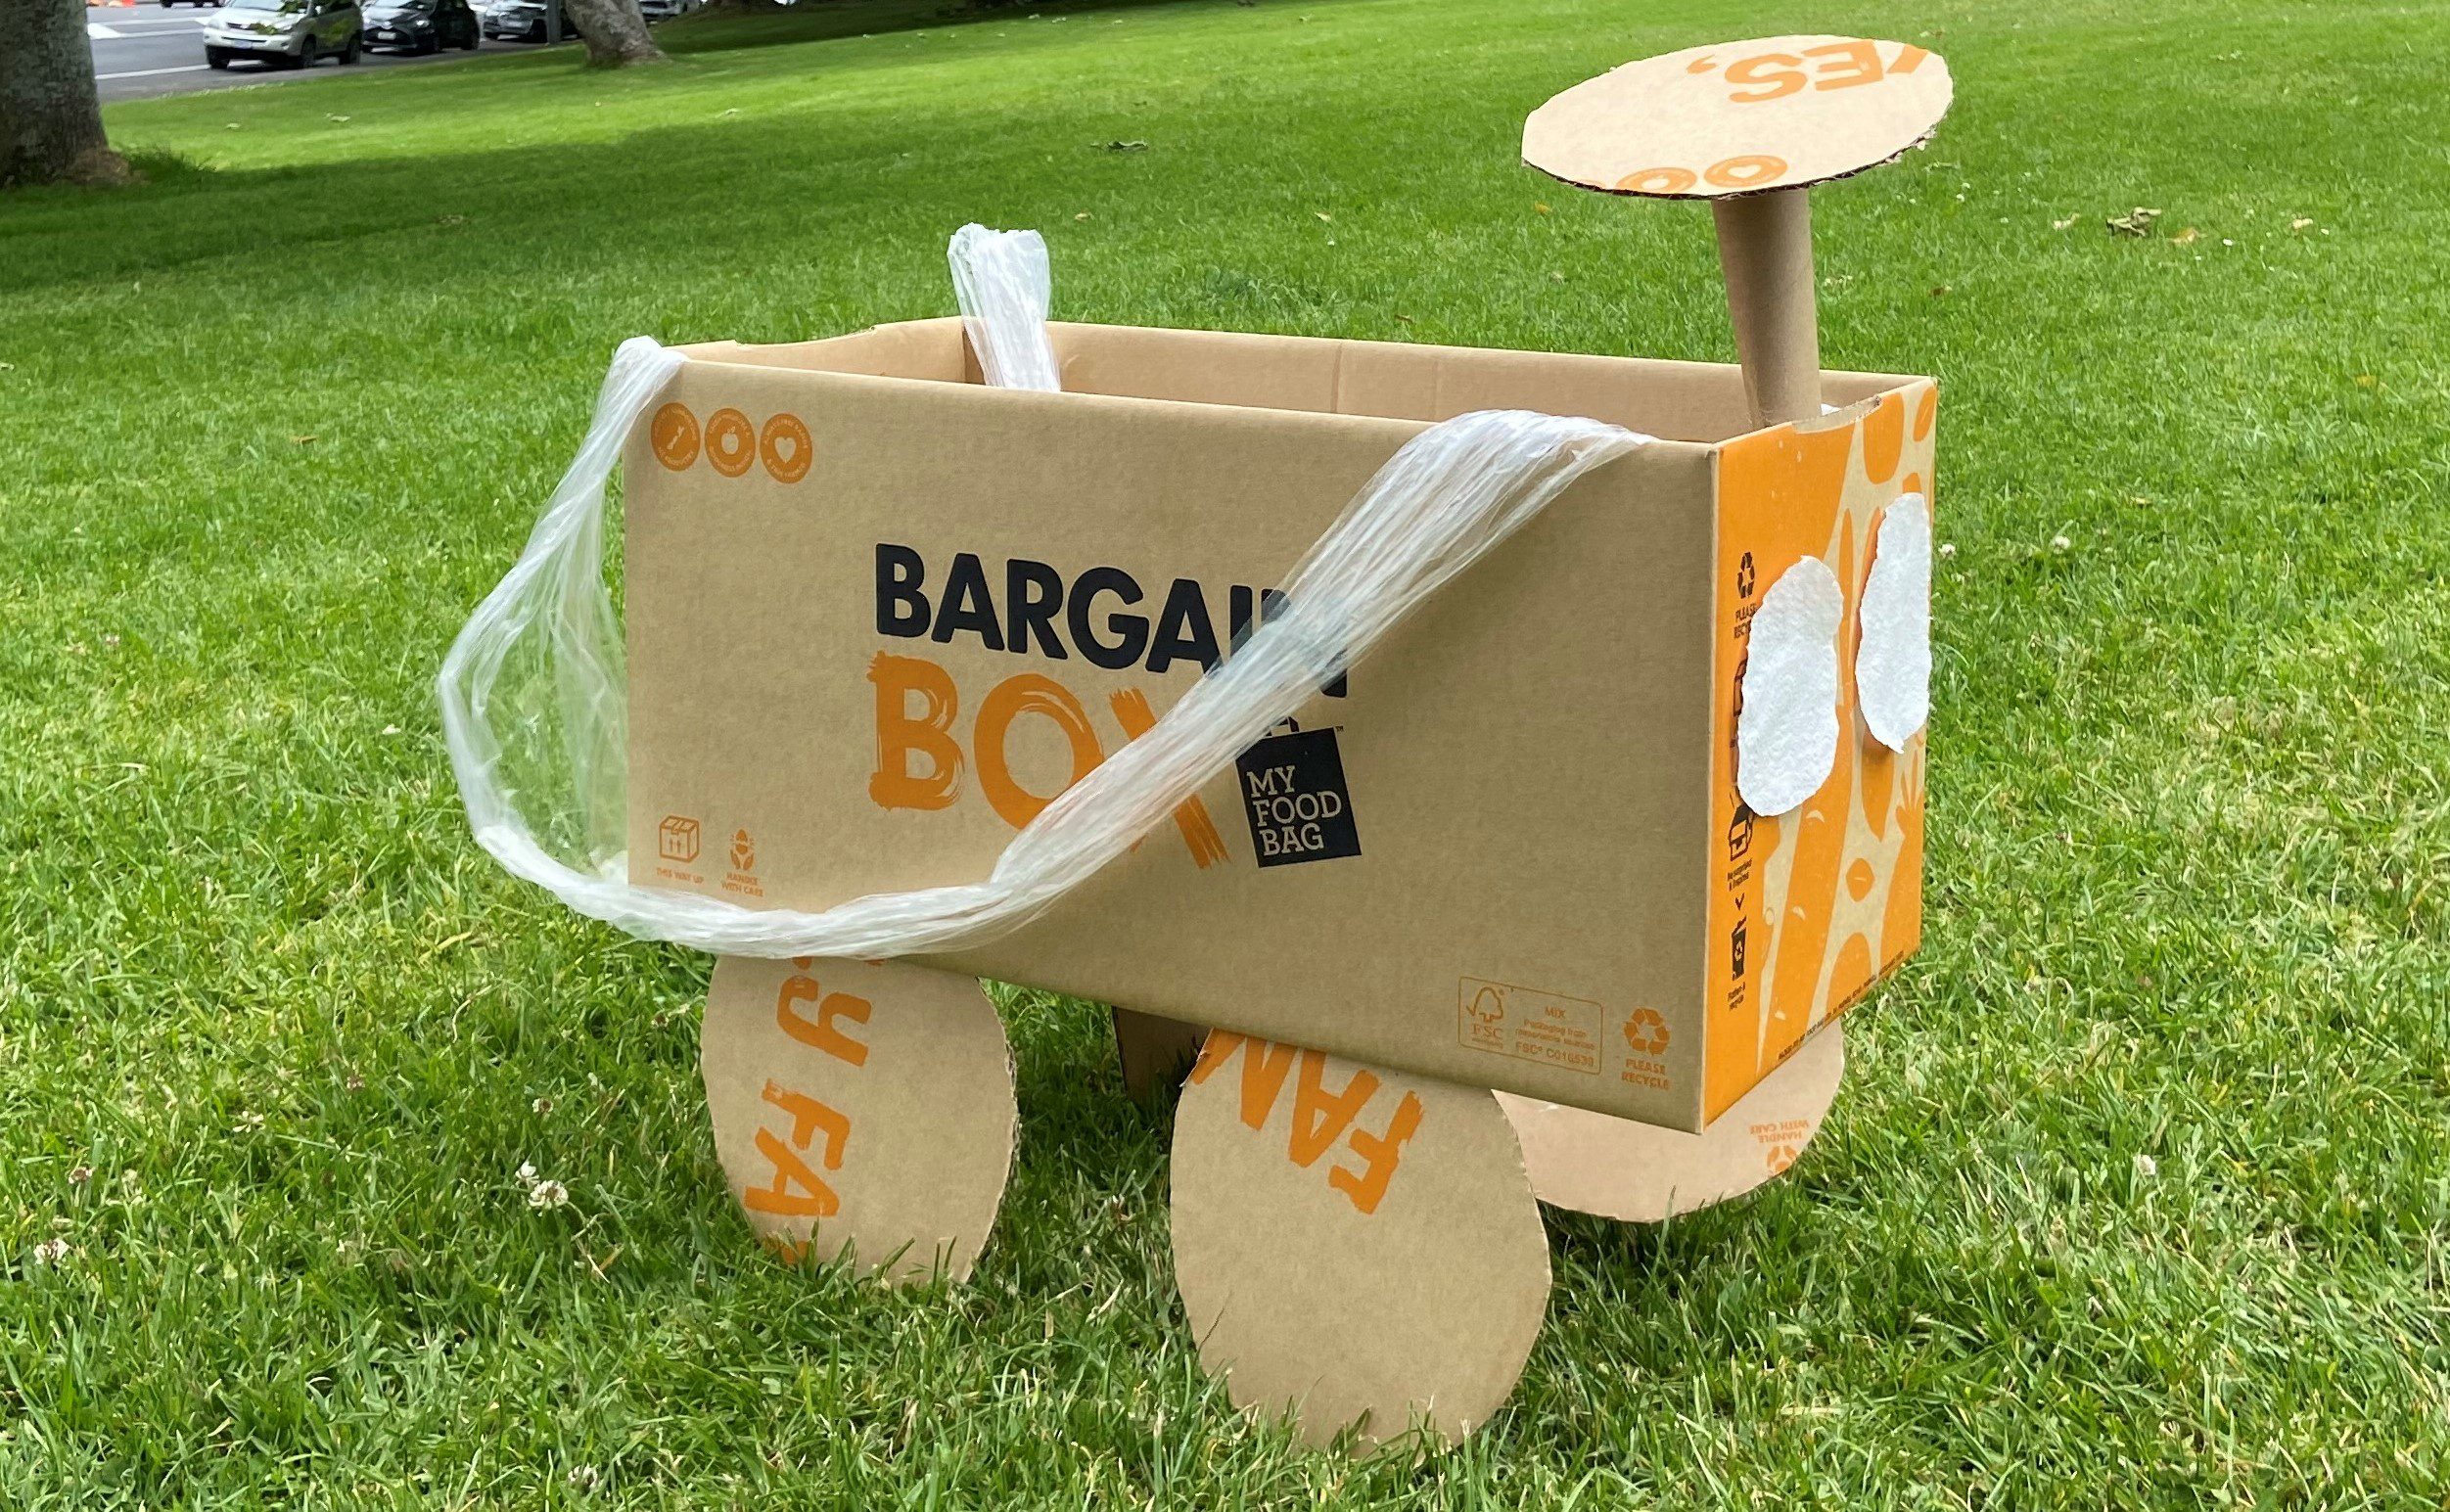 A cardboard car made from a Bargain Box